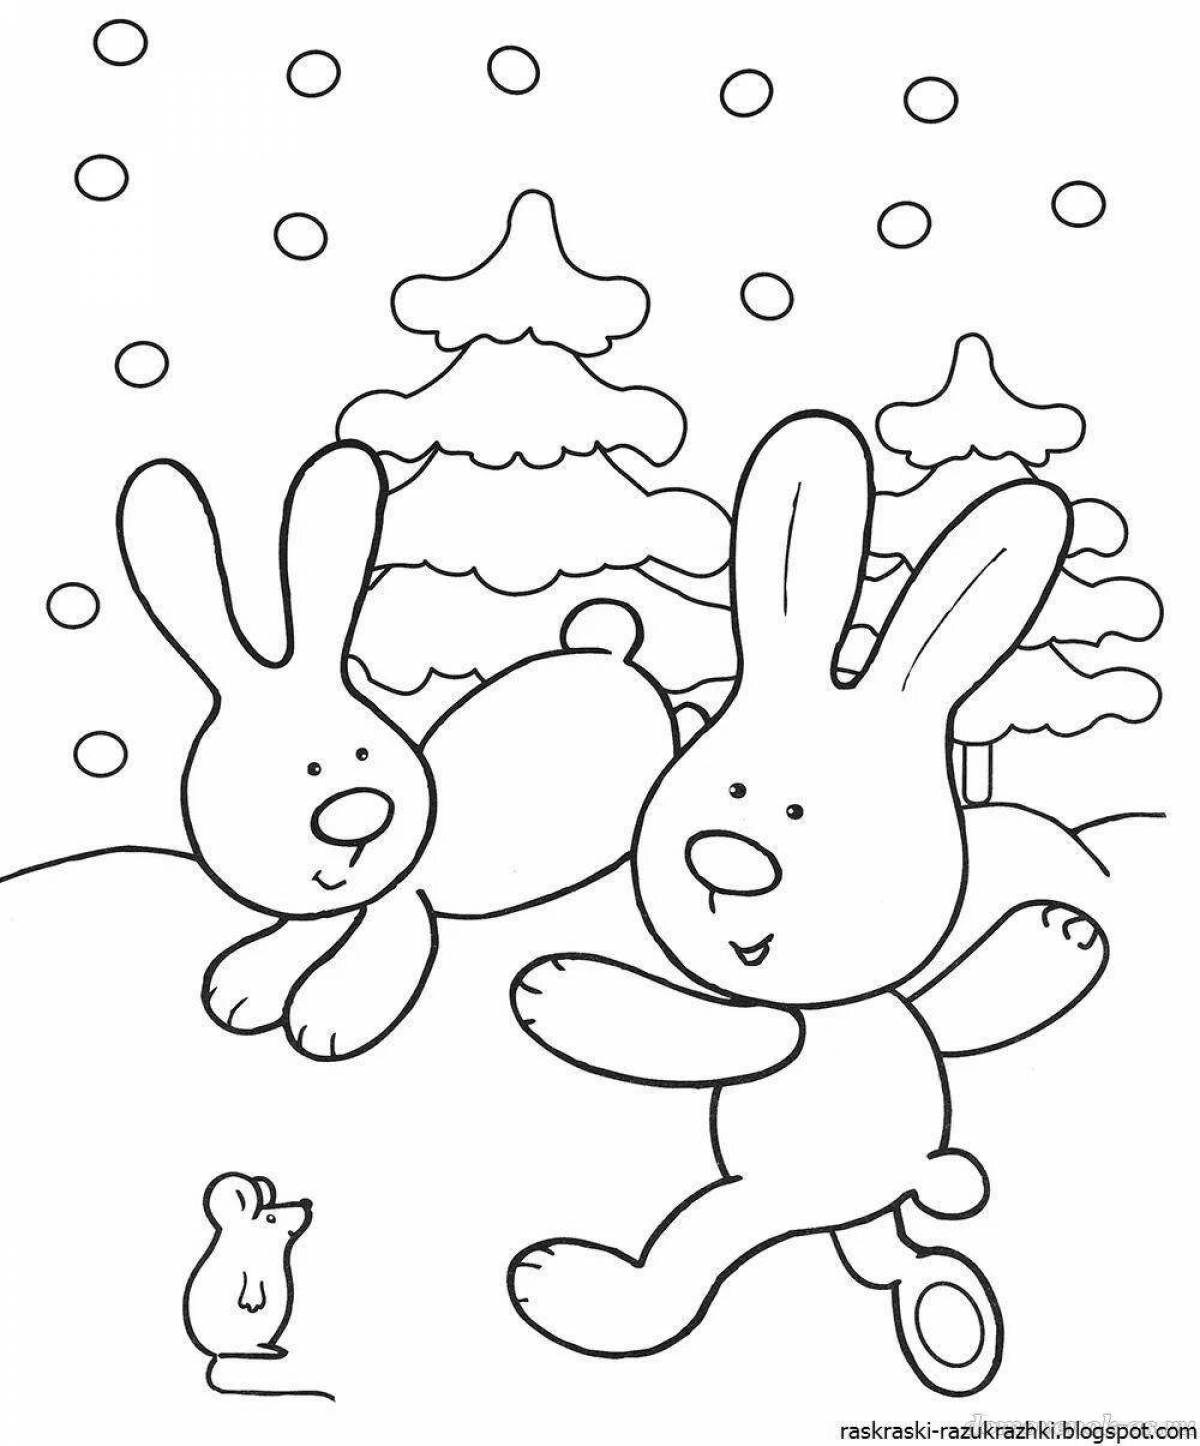 Смешная раскраска зайца для детей